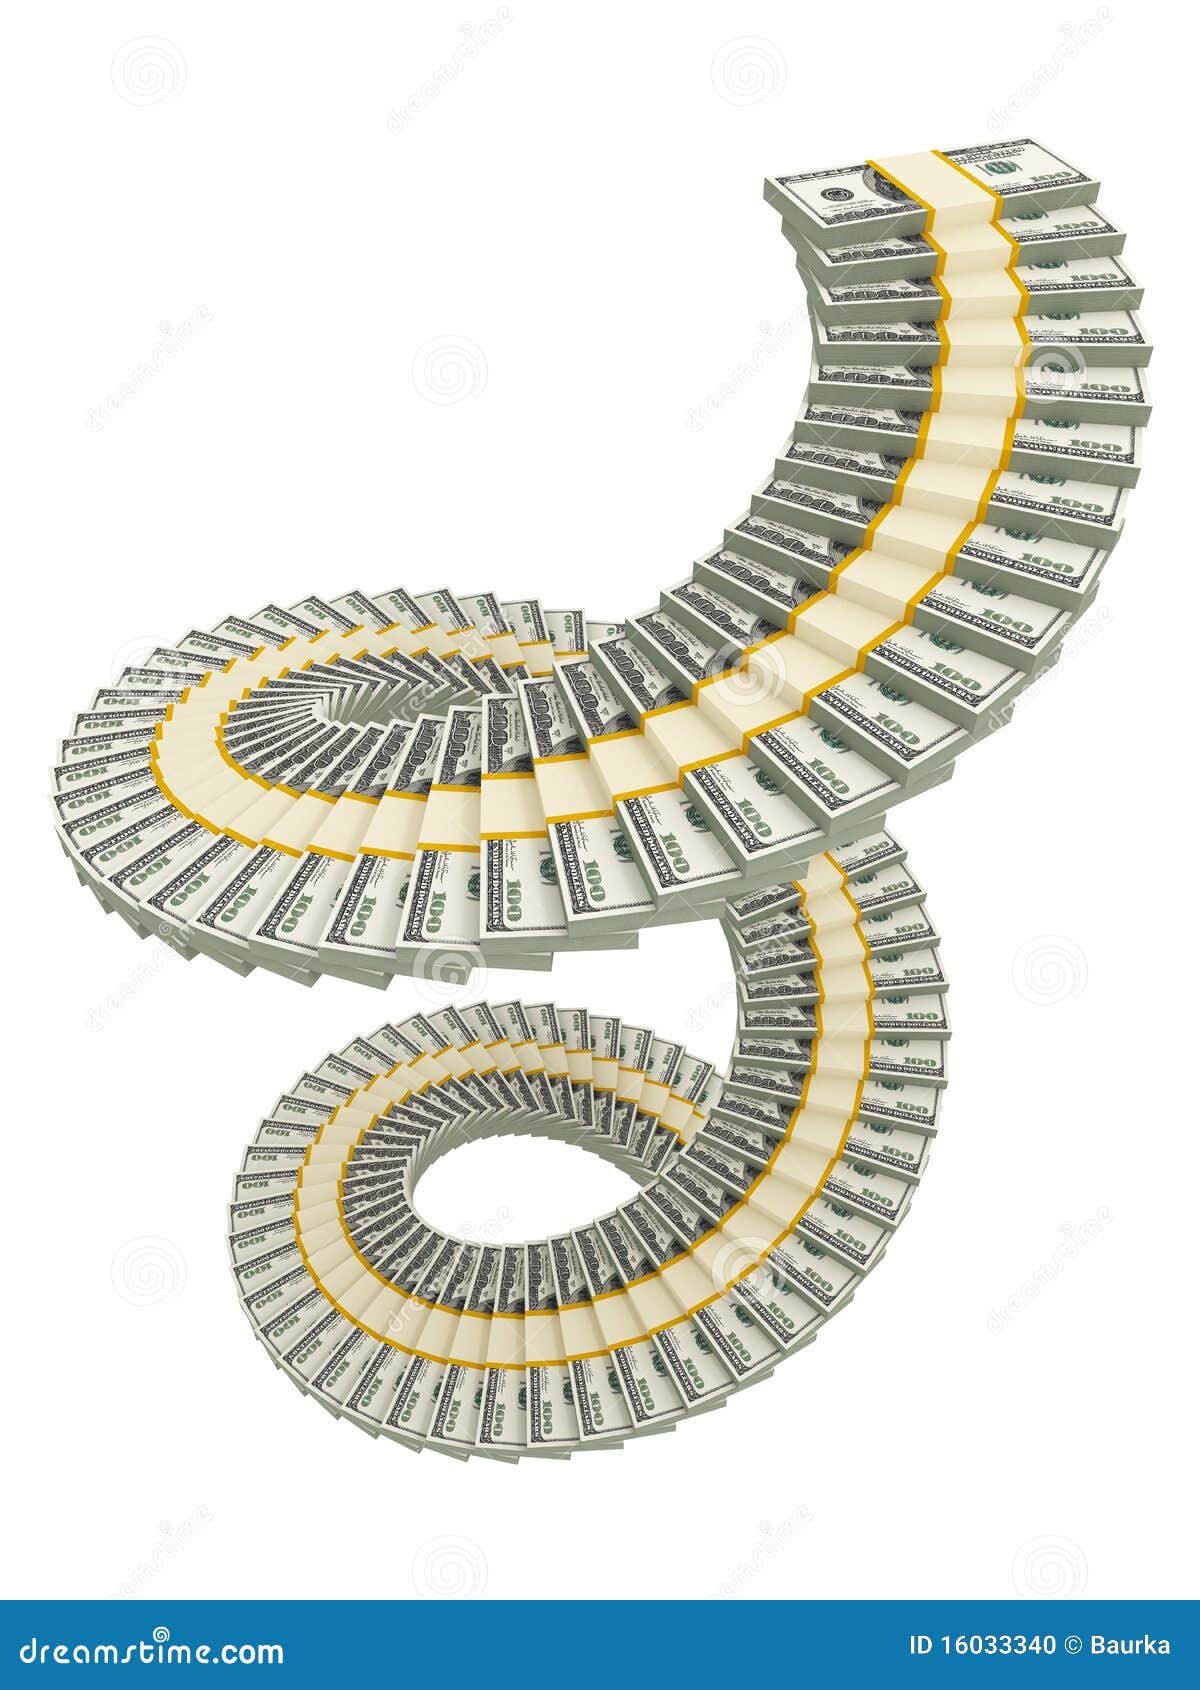 spiral usd stack